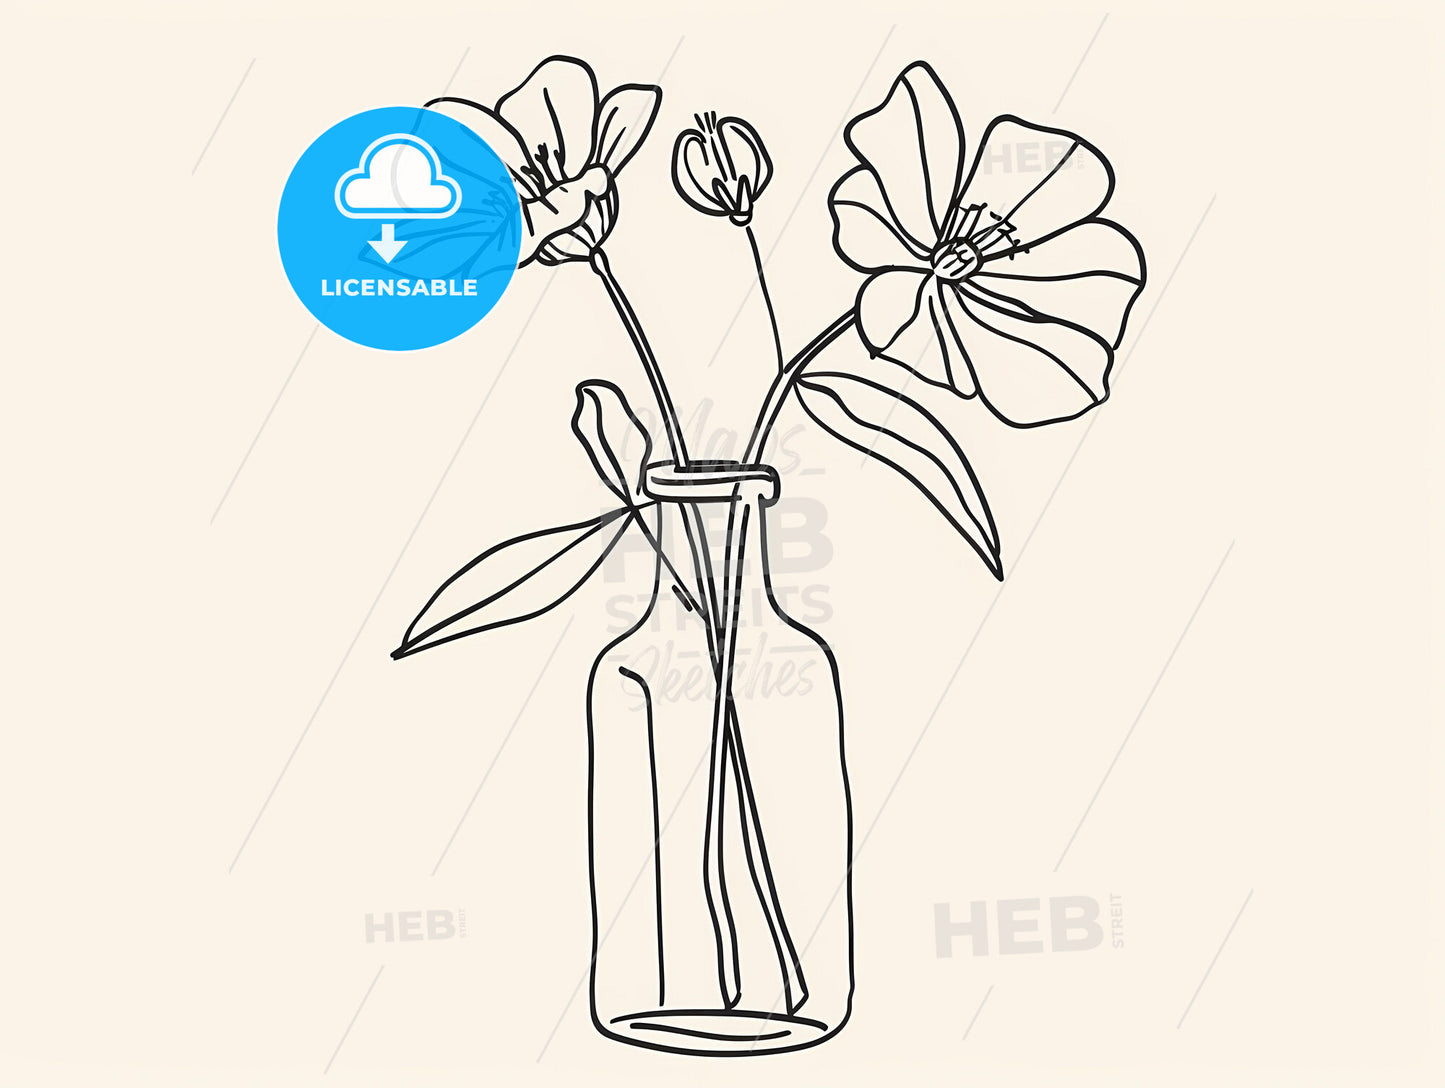 Minimalistic Line Drawing: Single Stem Flower in Glass Vase, White Background, Floral Art, Contemporary Decor, Simple and Elegant Botanical Illustration